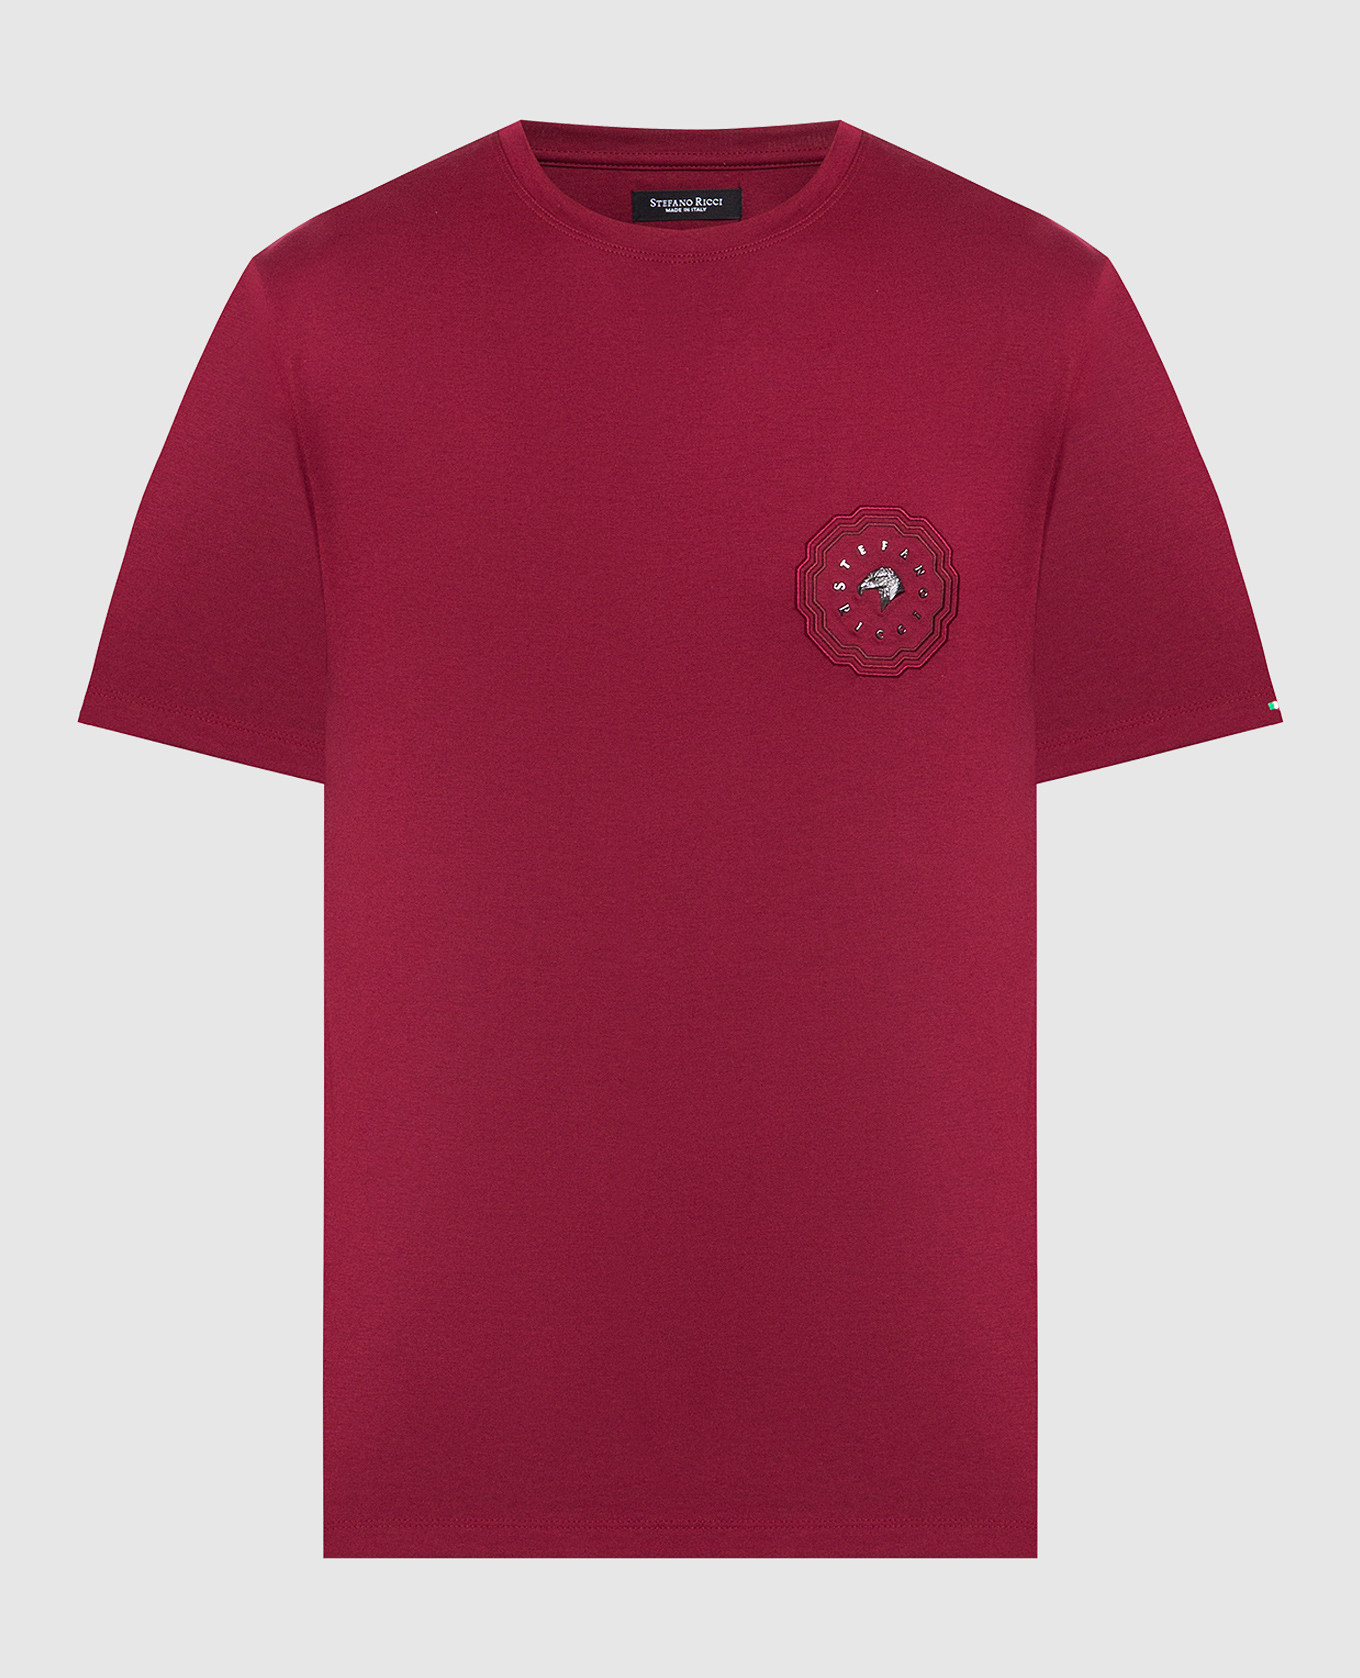 Burgundy t-shirt with logo